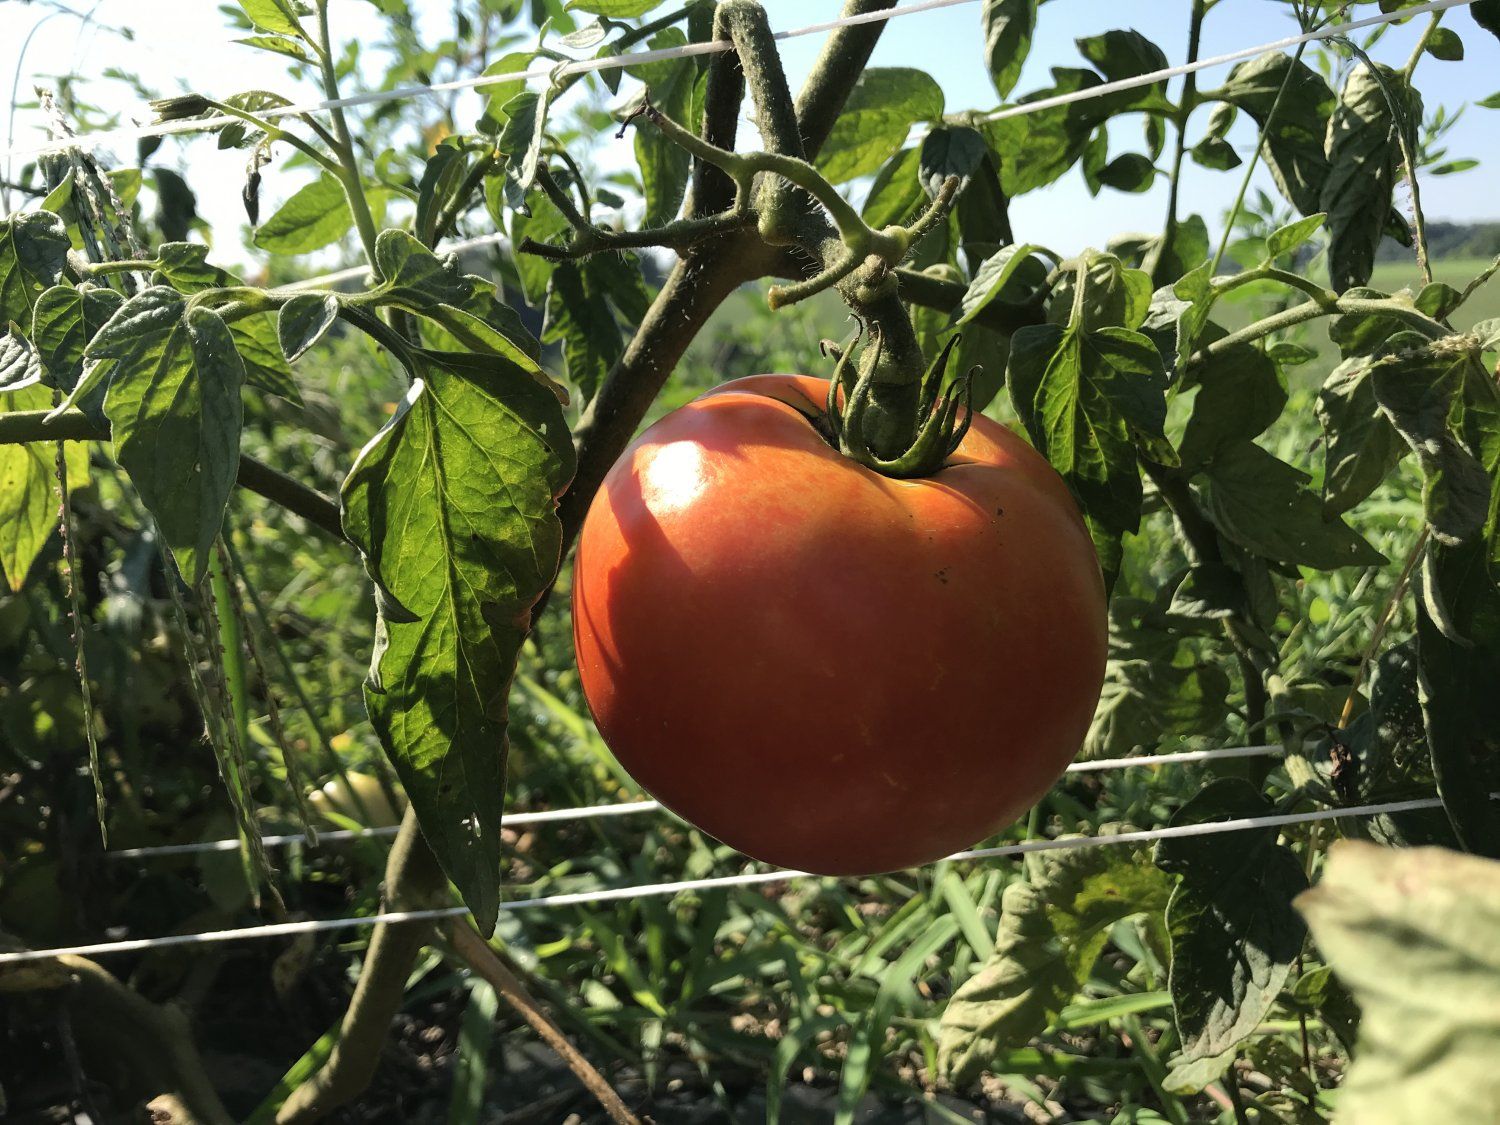 Next Happening: Tomatoes and Corn say Summer